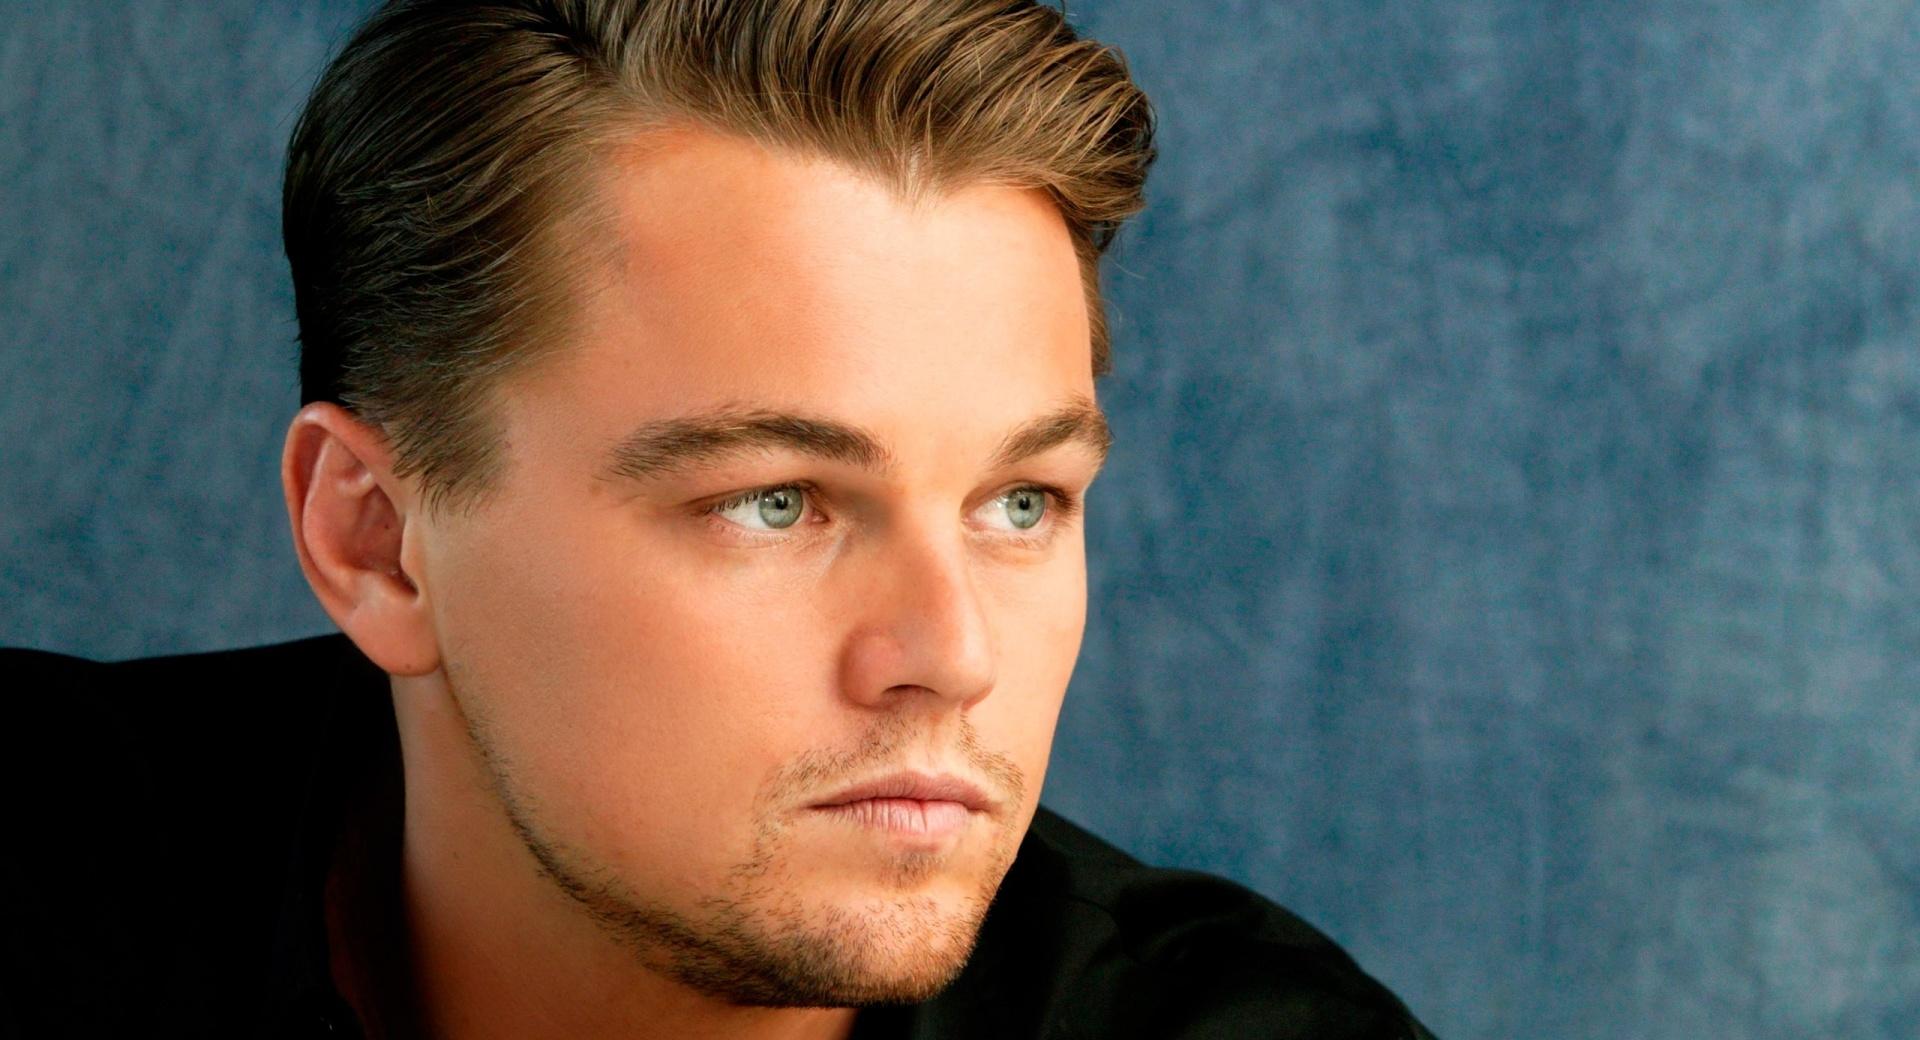 Leonardo DiCaprio Portrait at 1024 x 768 size wallpapers HD quality